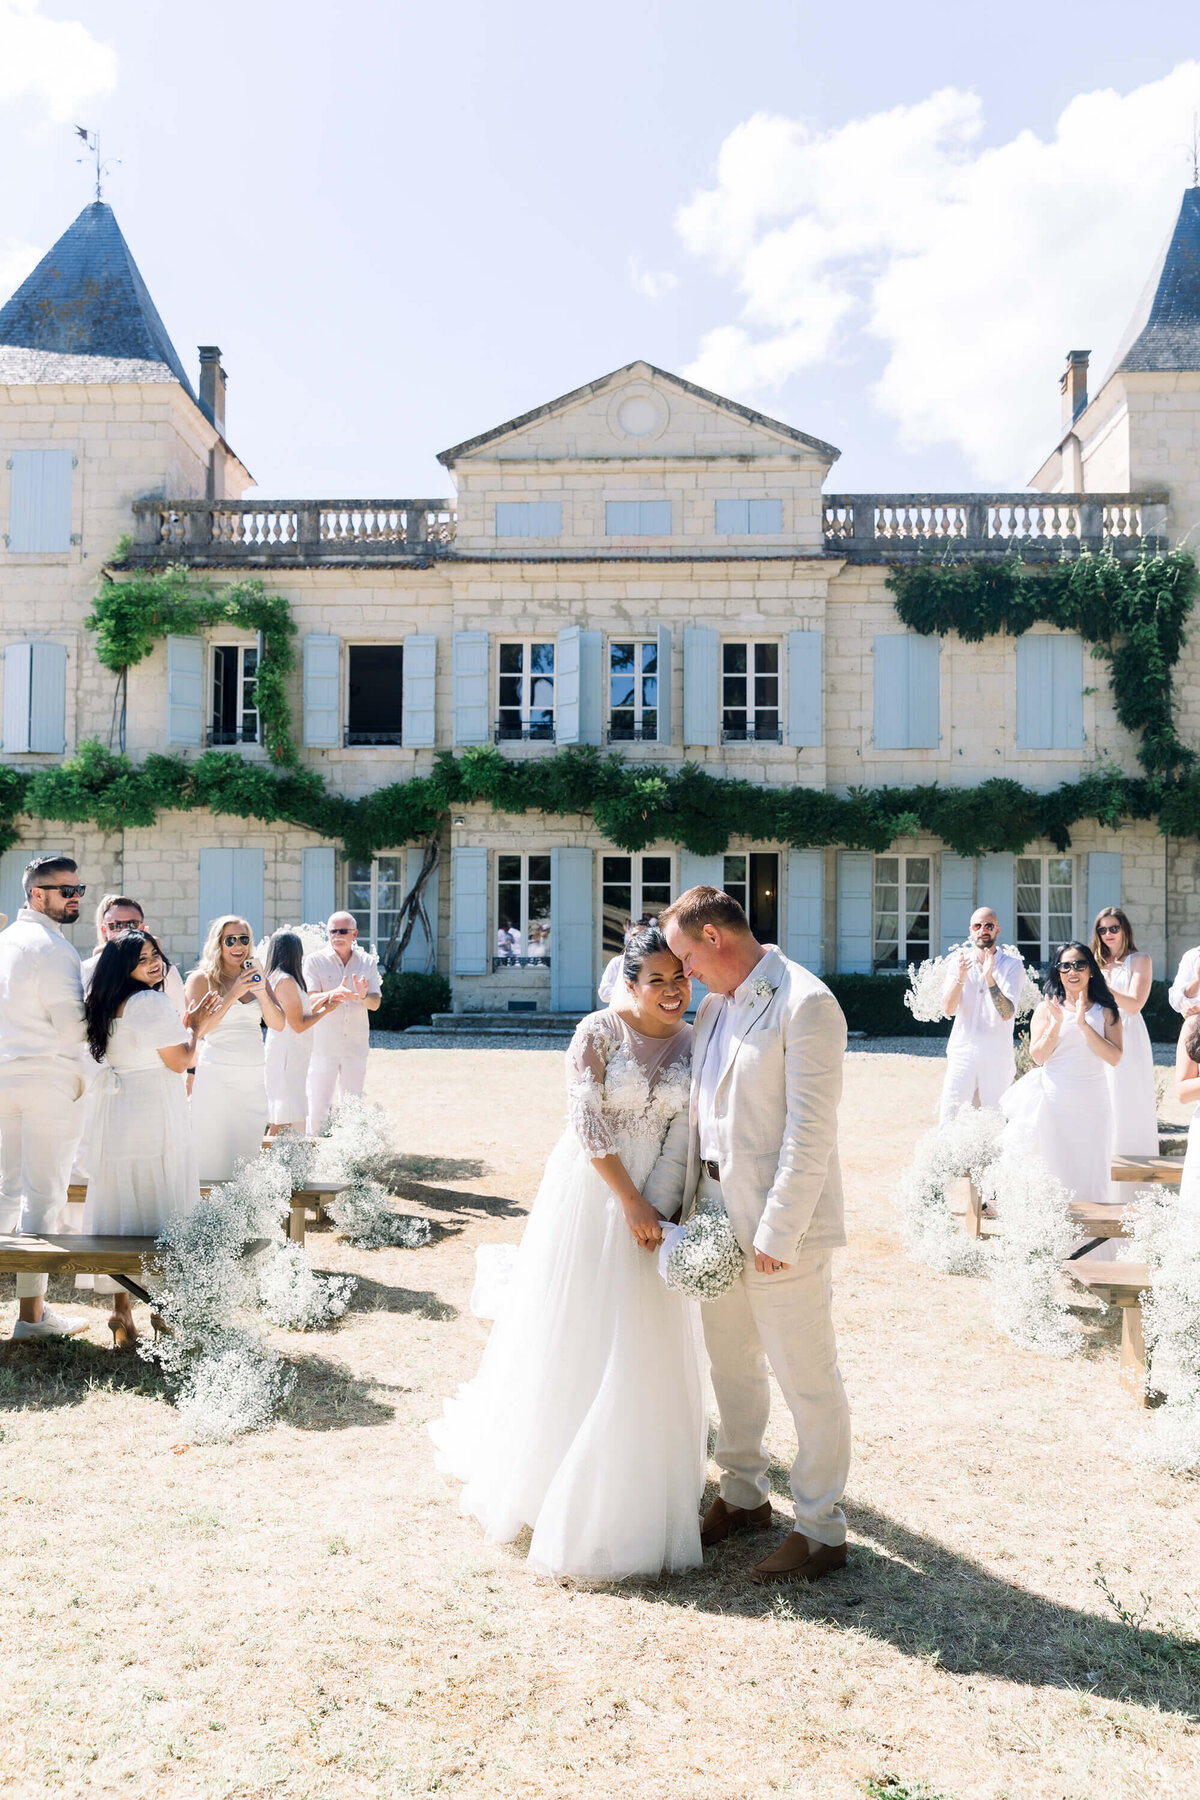 Victoria Engelen Flowers - A White Wedding in a French Chateau - JoannaandMattWedding_DariaLormanPhotography-441